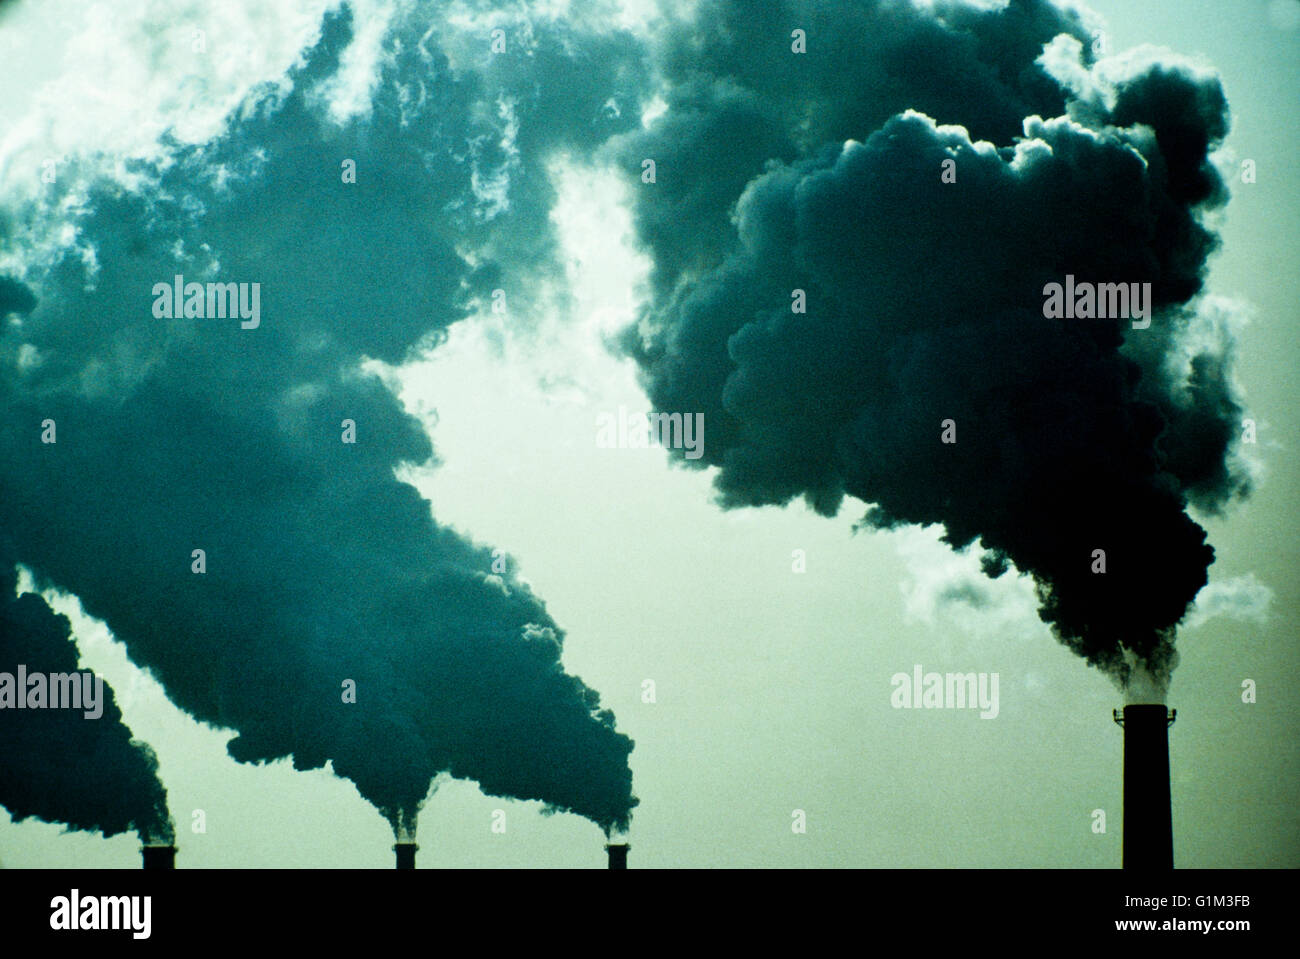 Smoke billowing from industrial smoke stacks Stock Photo